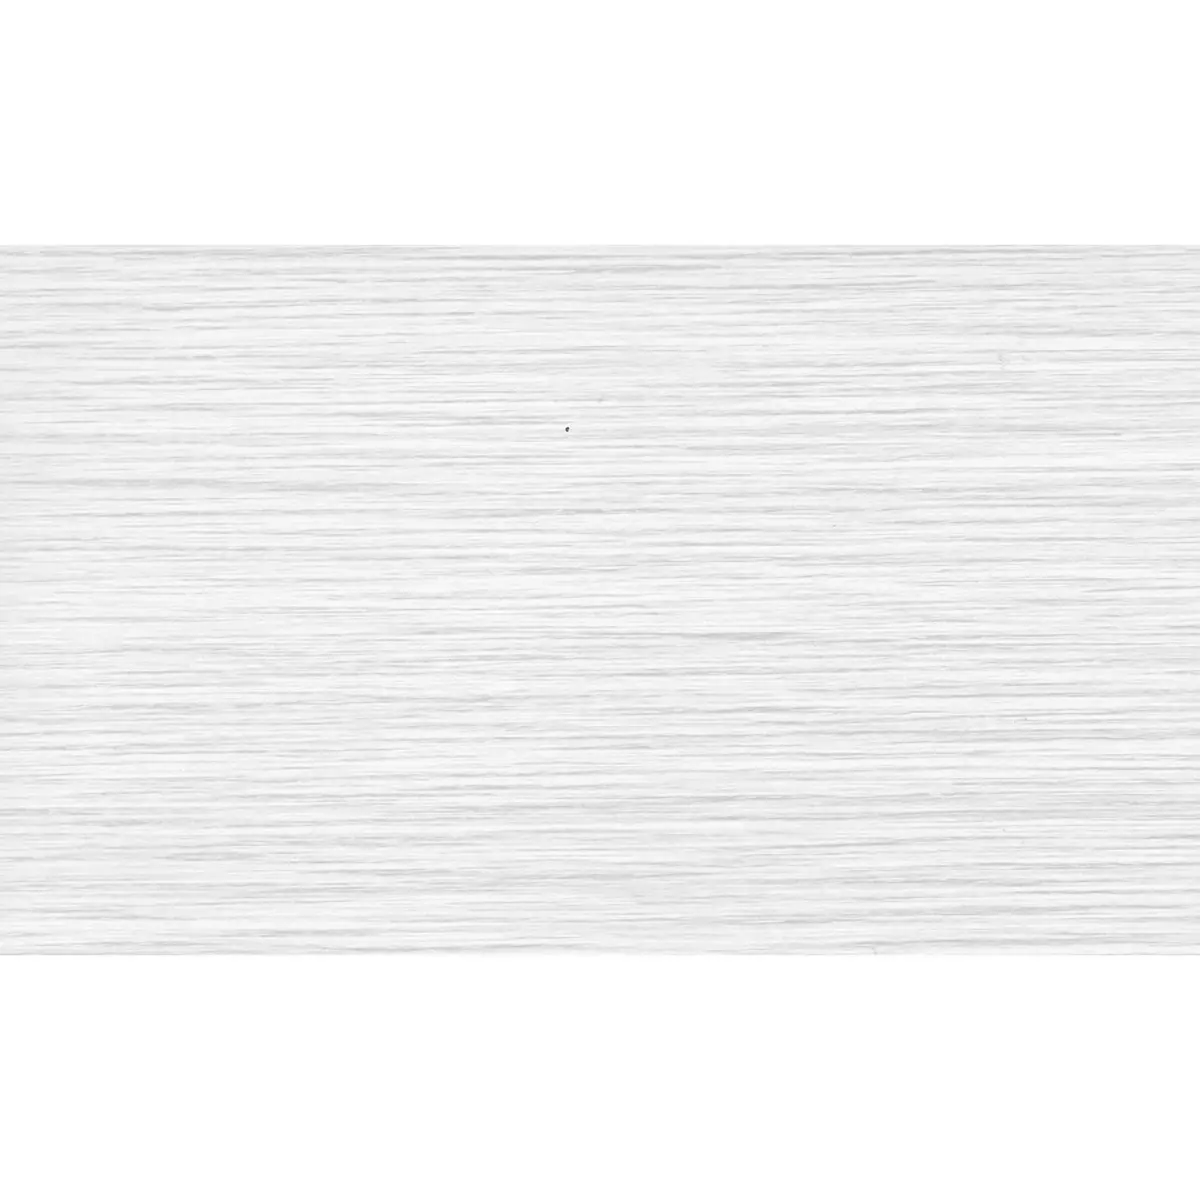 HABITABLE Adhésif décoratif Chêne blanchi - 200 x 67,5 cm - Blanc